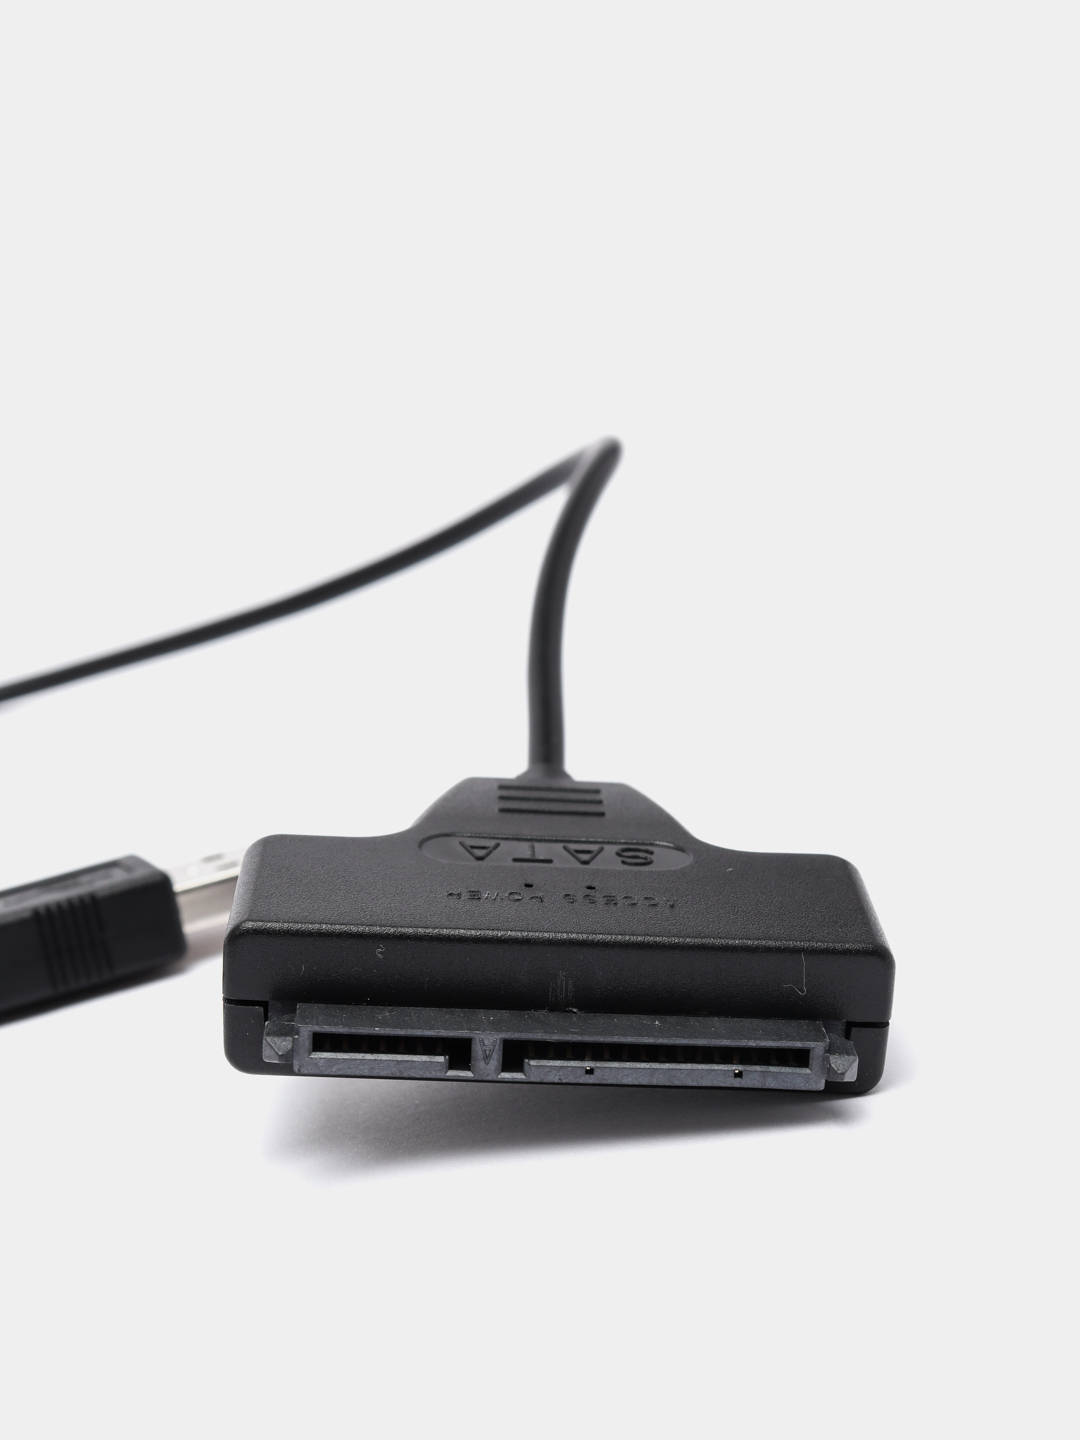 USB 2.0-SATA и USB 3.0-SATA